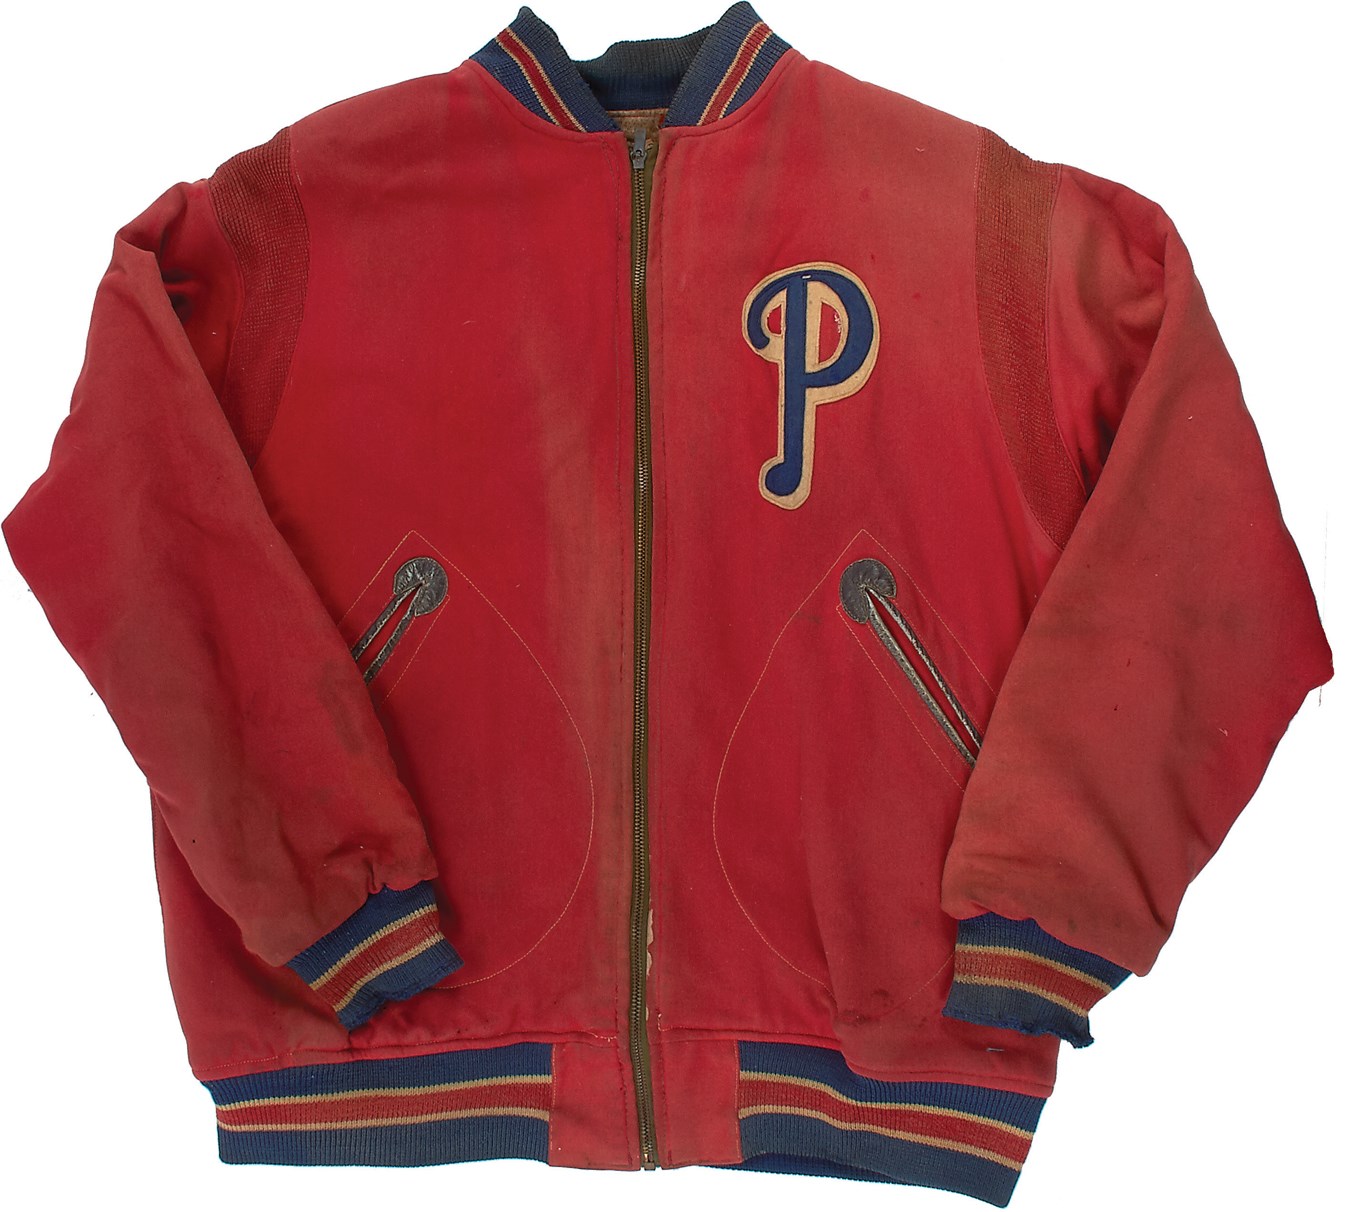 Baseball Equipment - 1947 Al Jurisich Game Worn Philadelphia Phillies Jacket